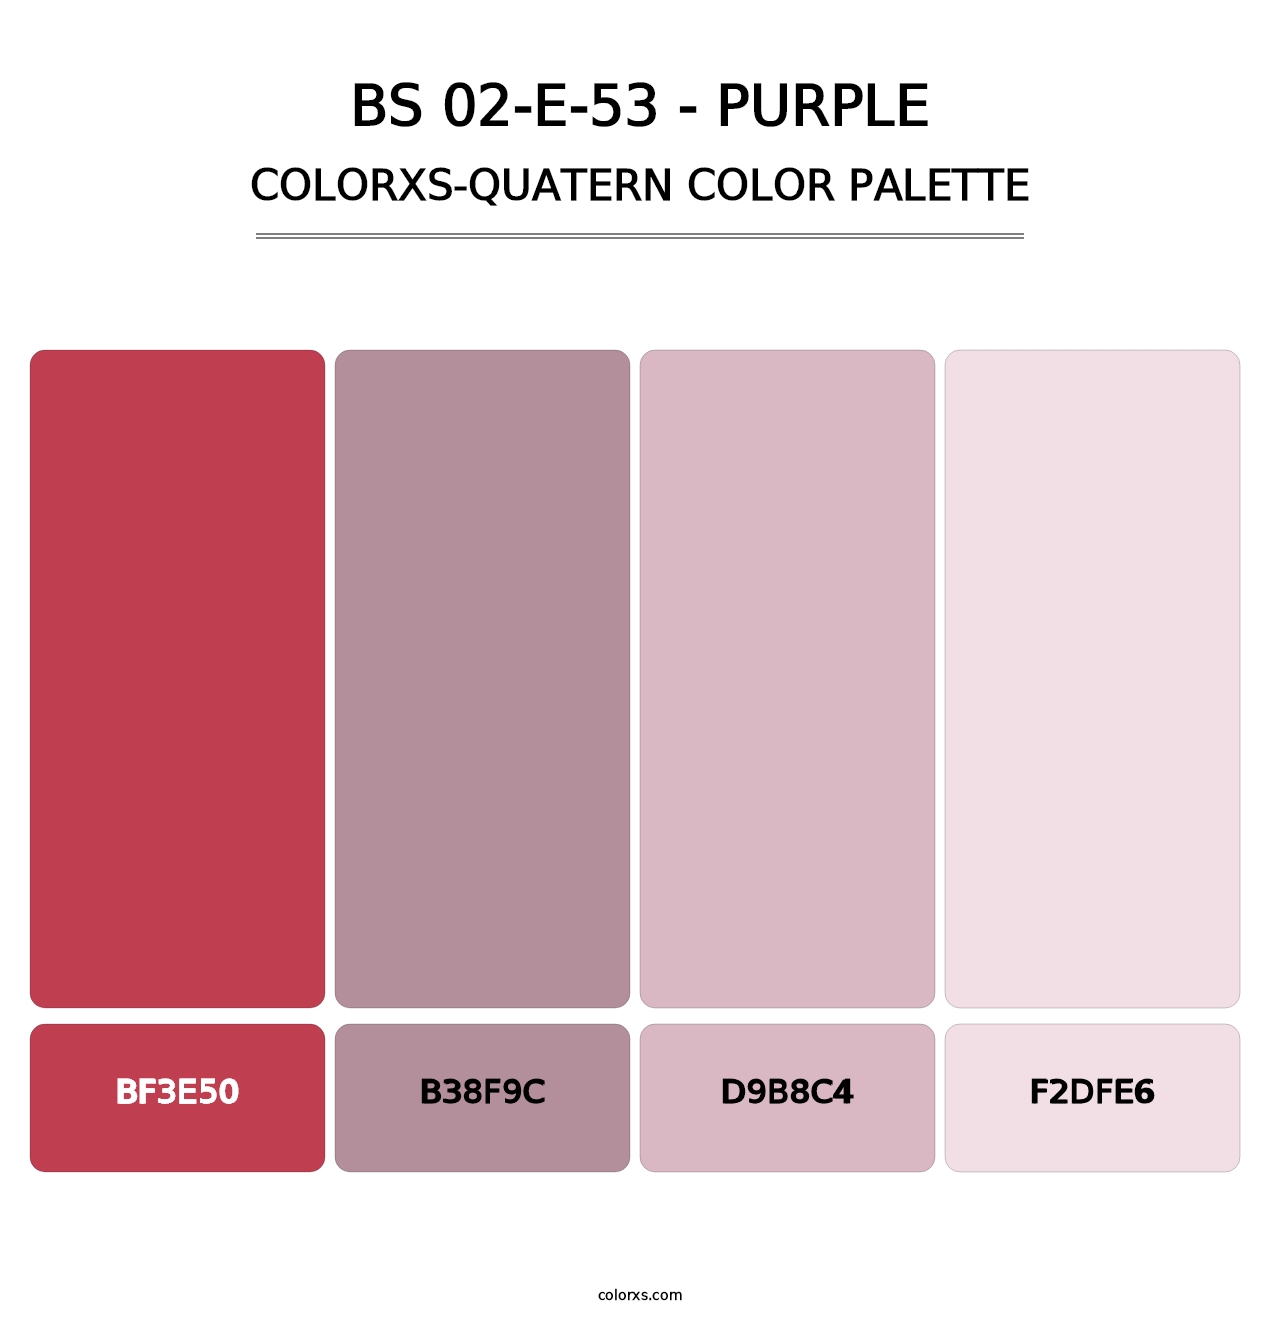 BS 02-E-53 - Purple - Colorxs Quatern Palette